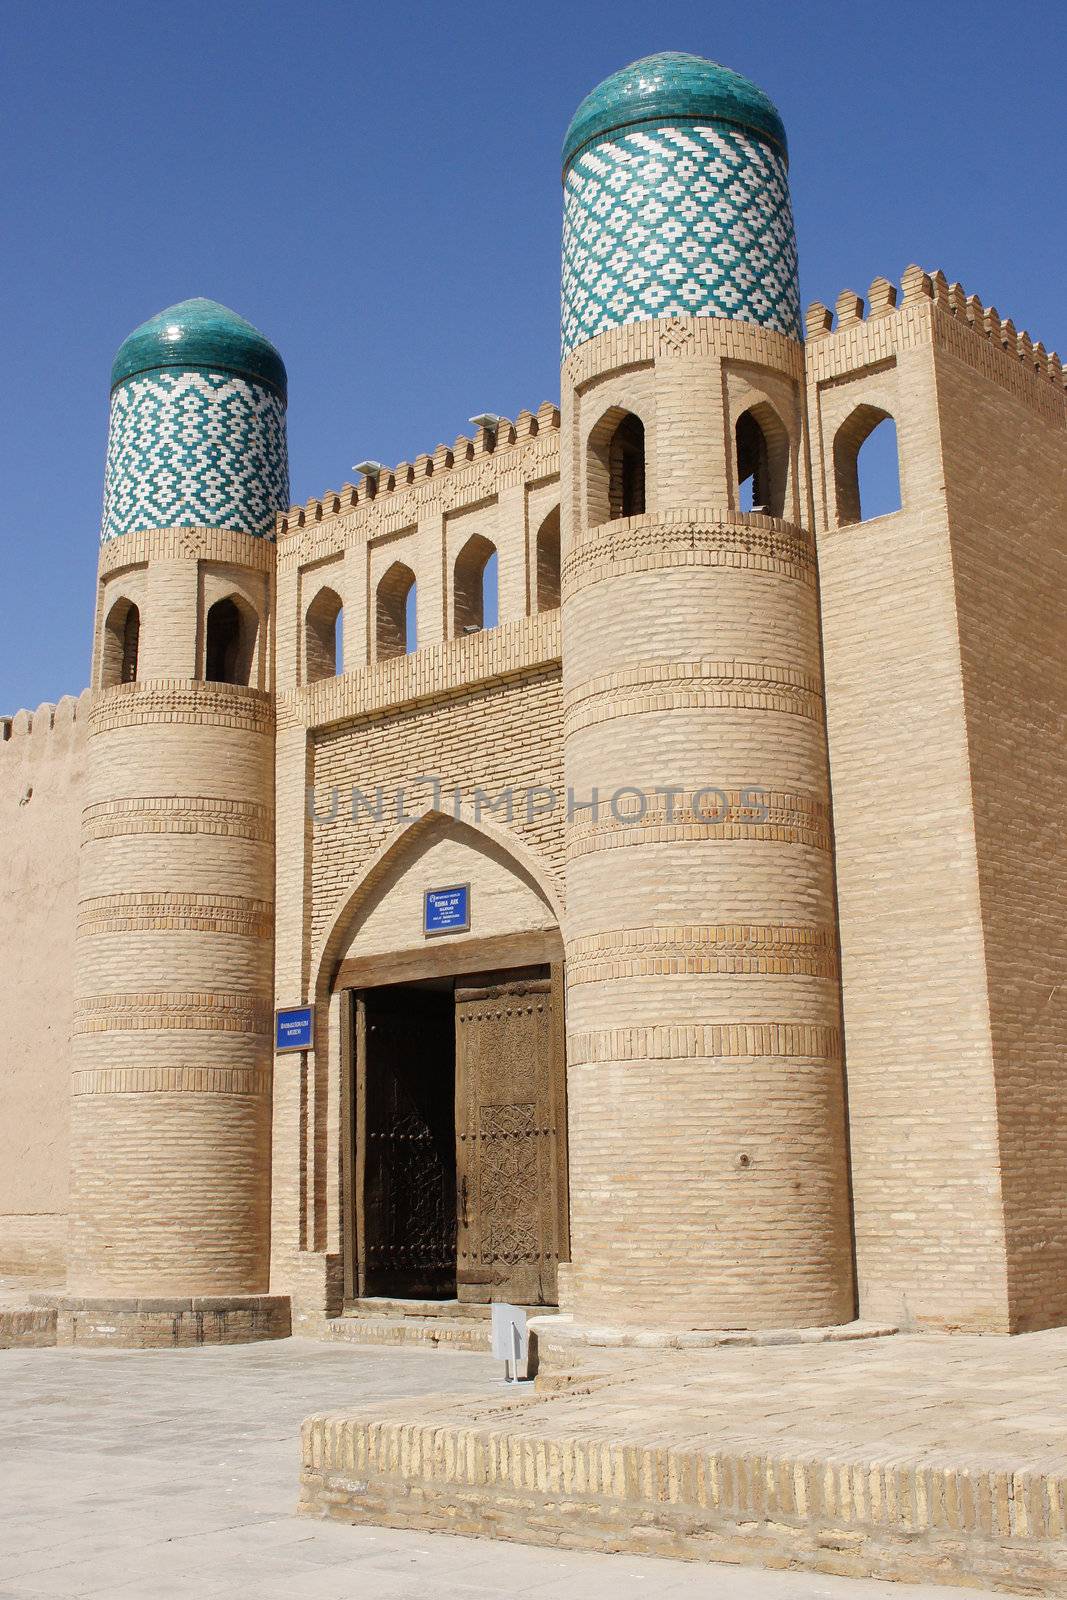 Ancient citadel of Khiva, Silk Road, Uzbekistan, Central Asia